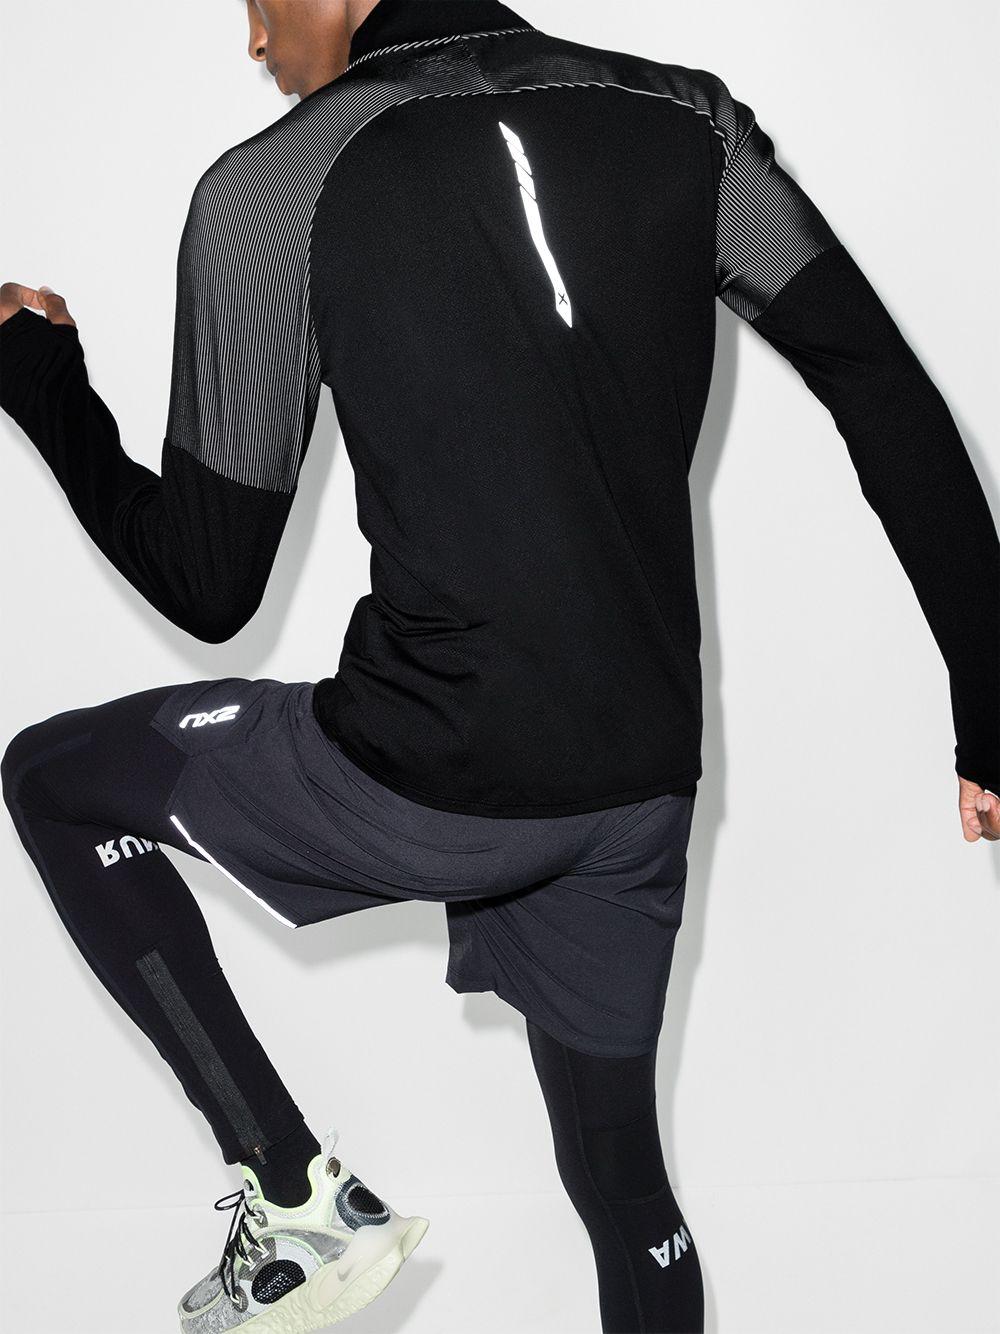 2XU Synthetic Ghost Half-zip Performance Top in Black for Men - Lyst